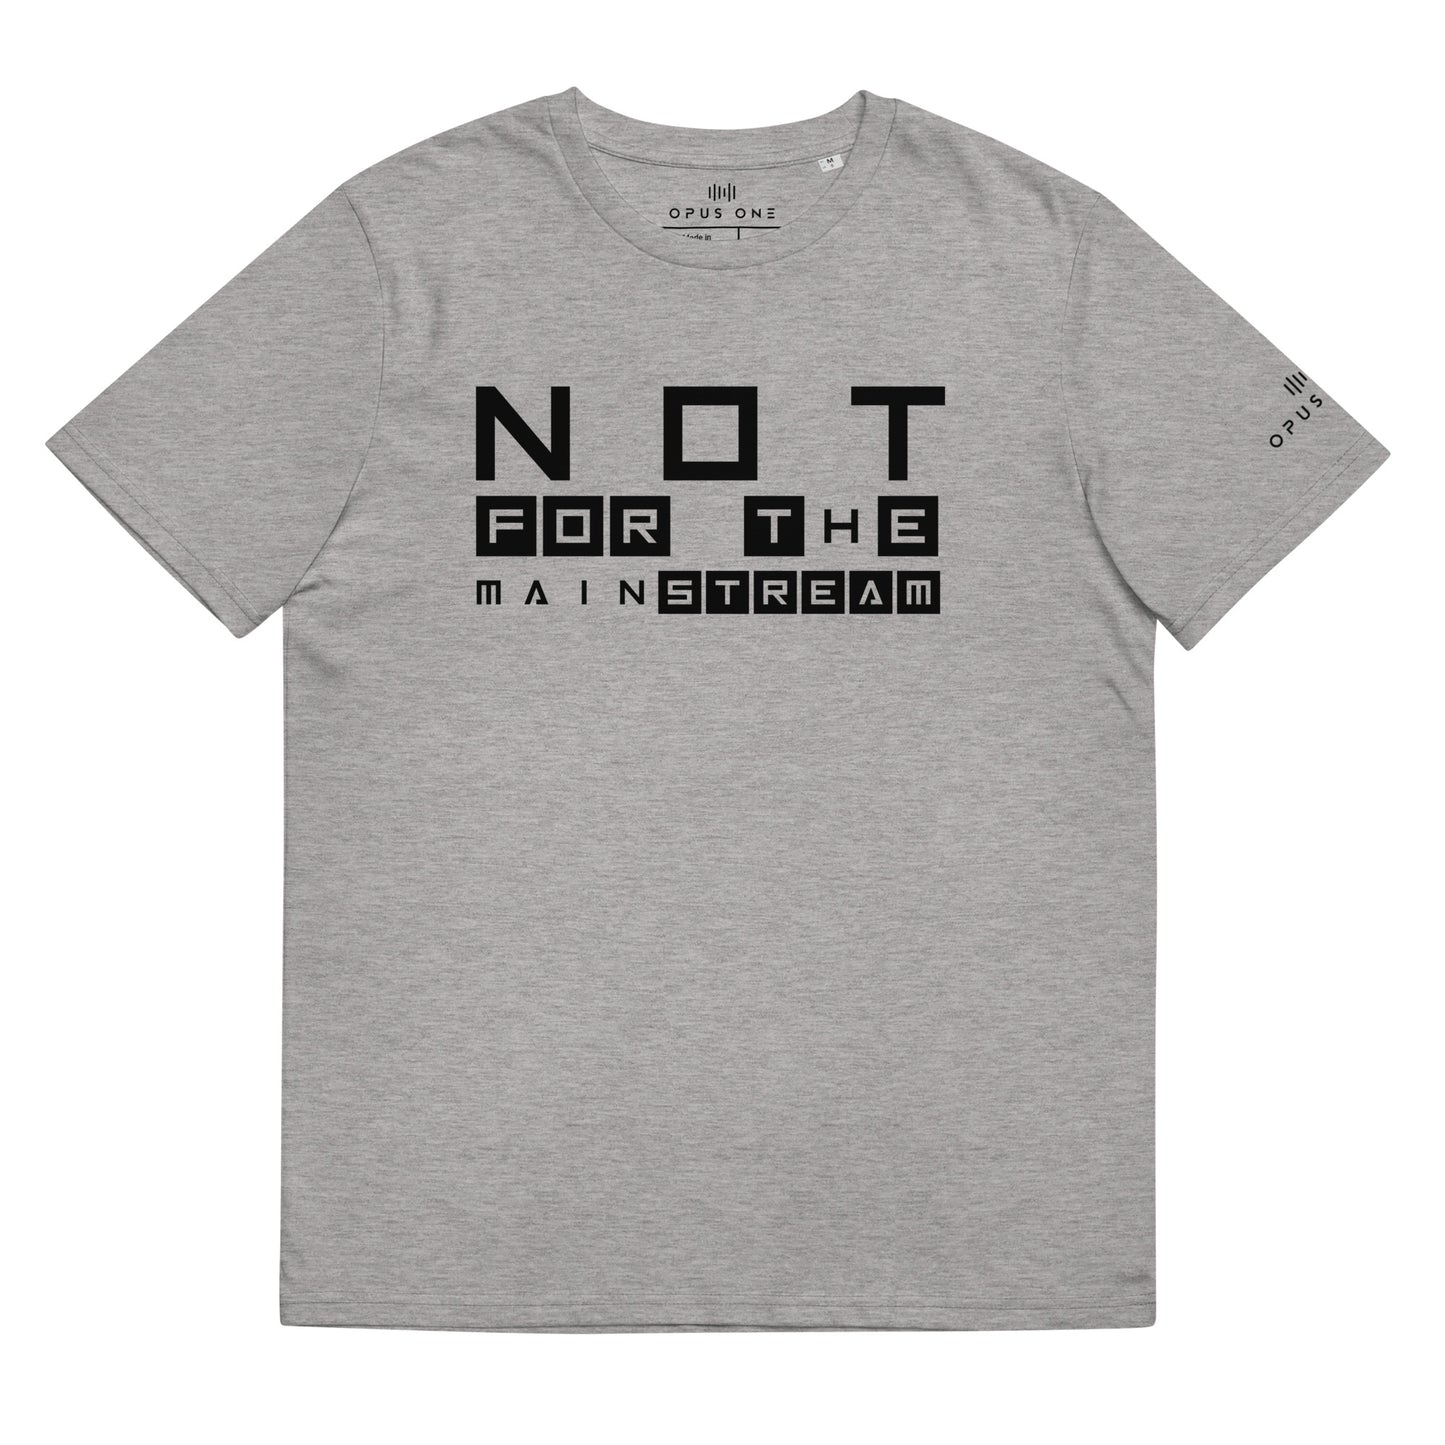 NFTM (v1) Unisex organic cotton t-shirt (Black Text)